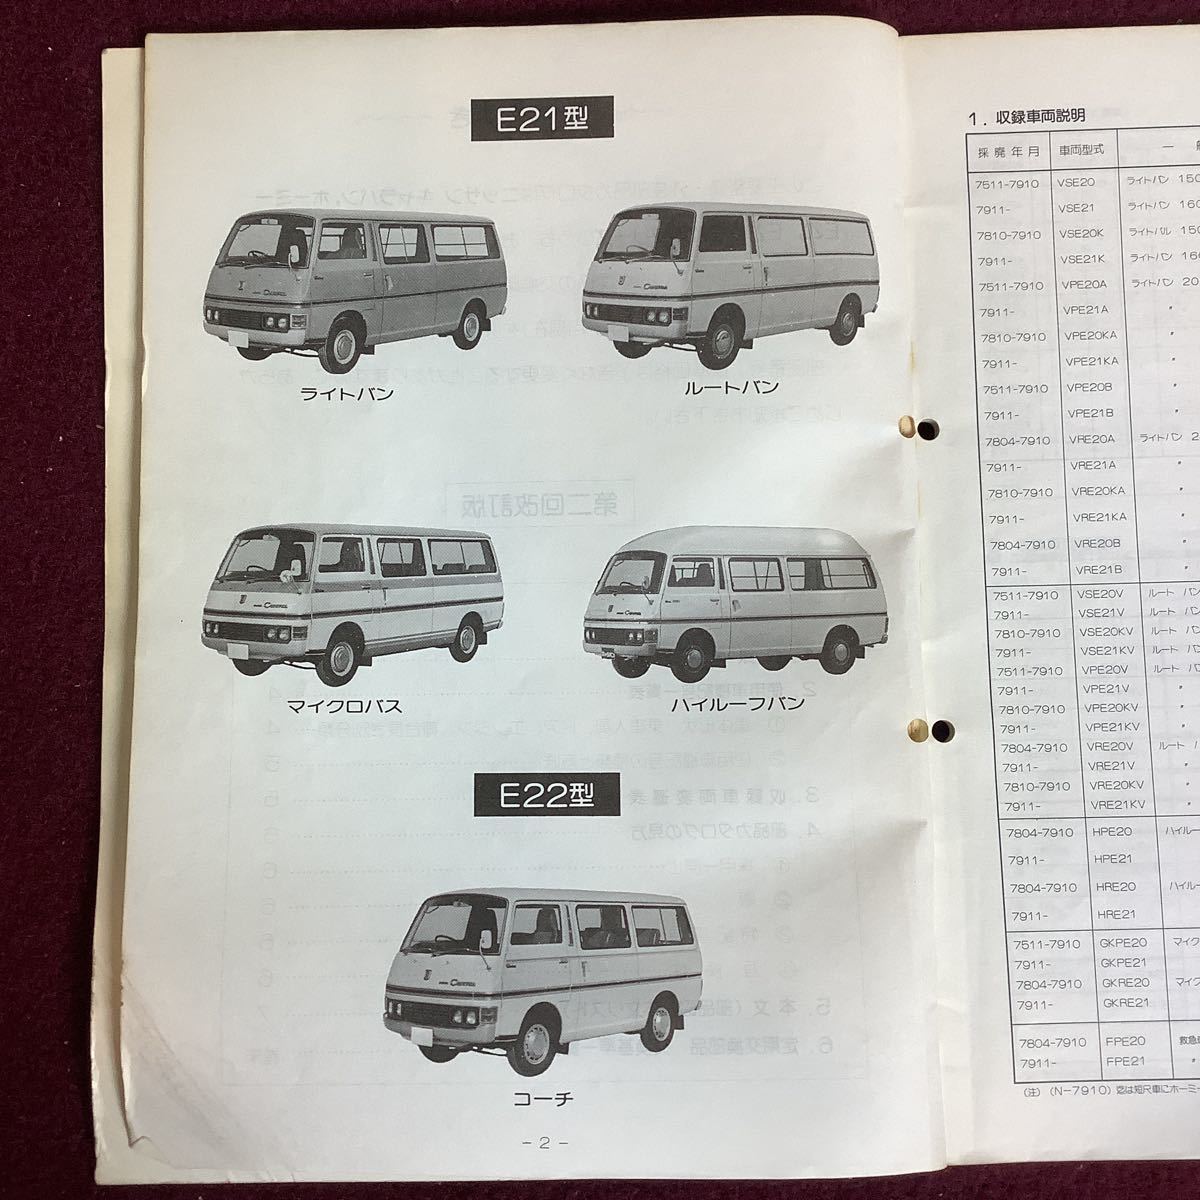  Nissan NISSAN Caravan Homy E20,E21,E22 форма серии главный обслуживание * экстерьер детали каталог \'75~\'80